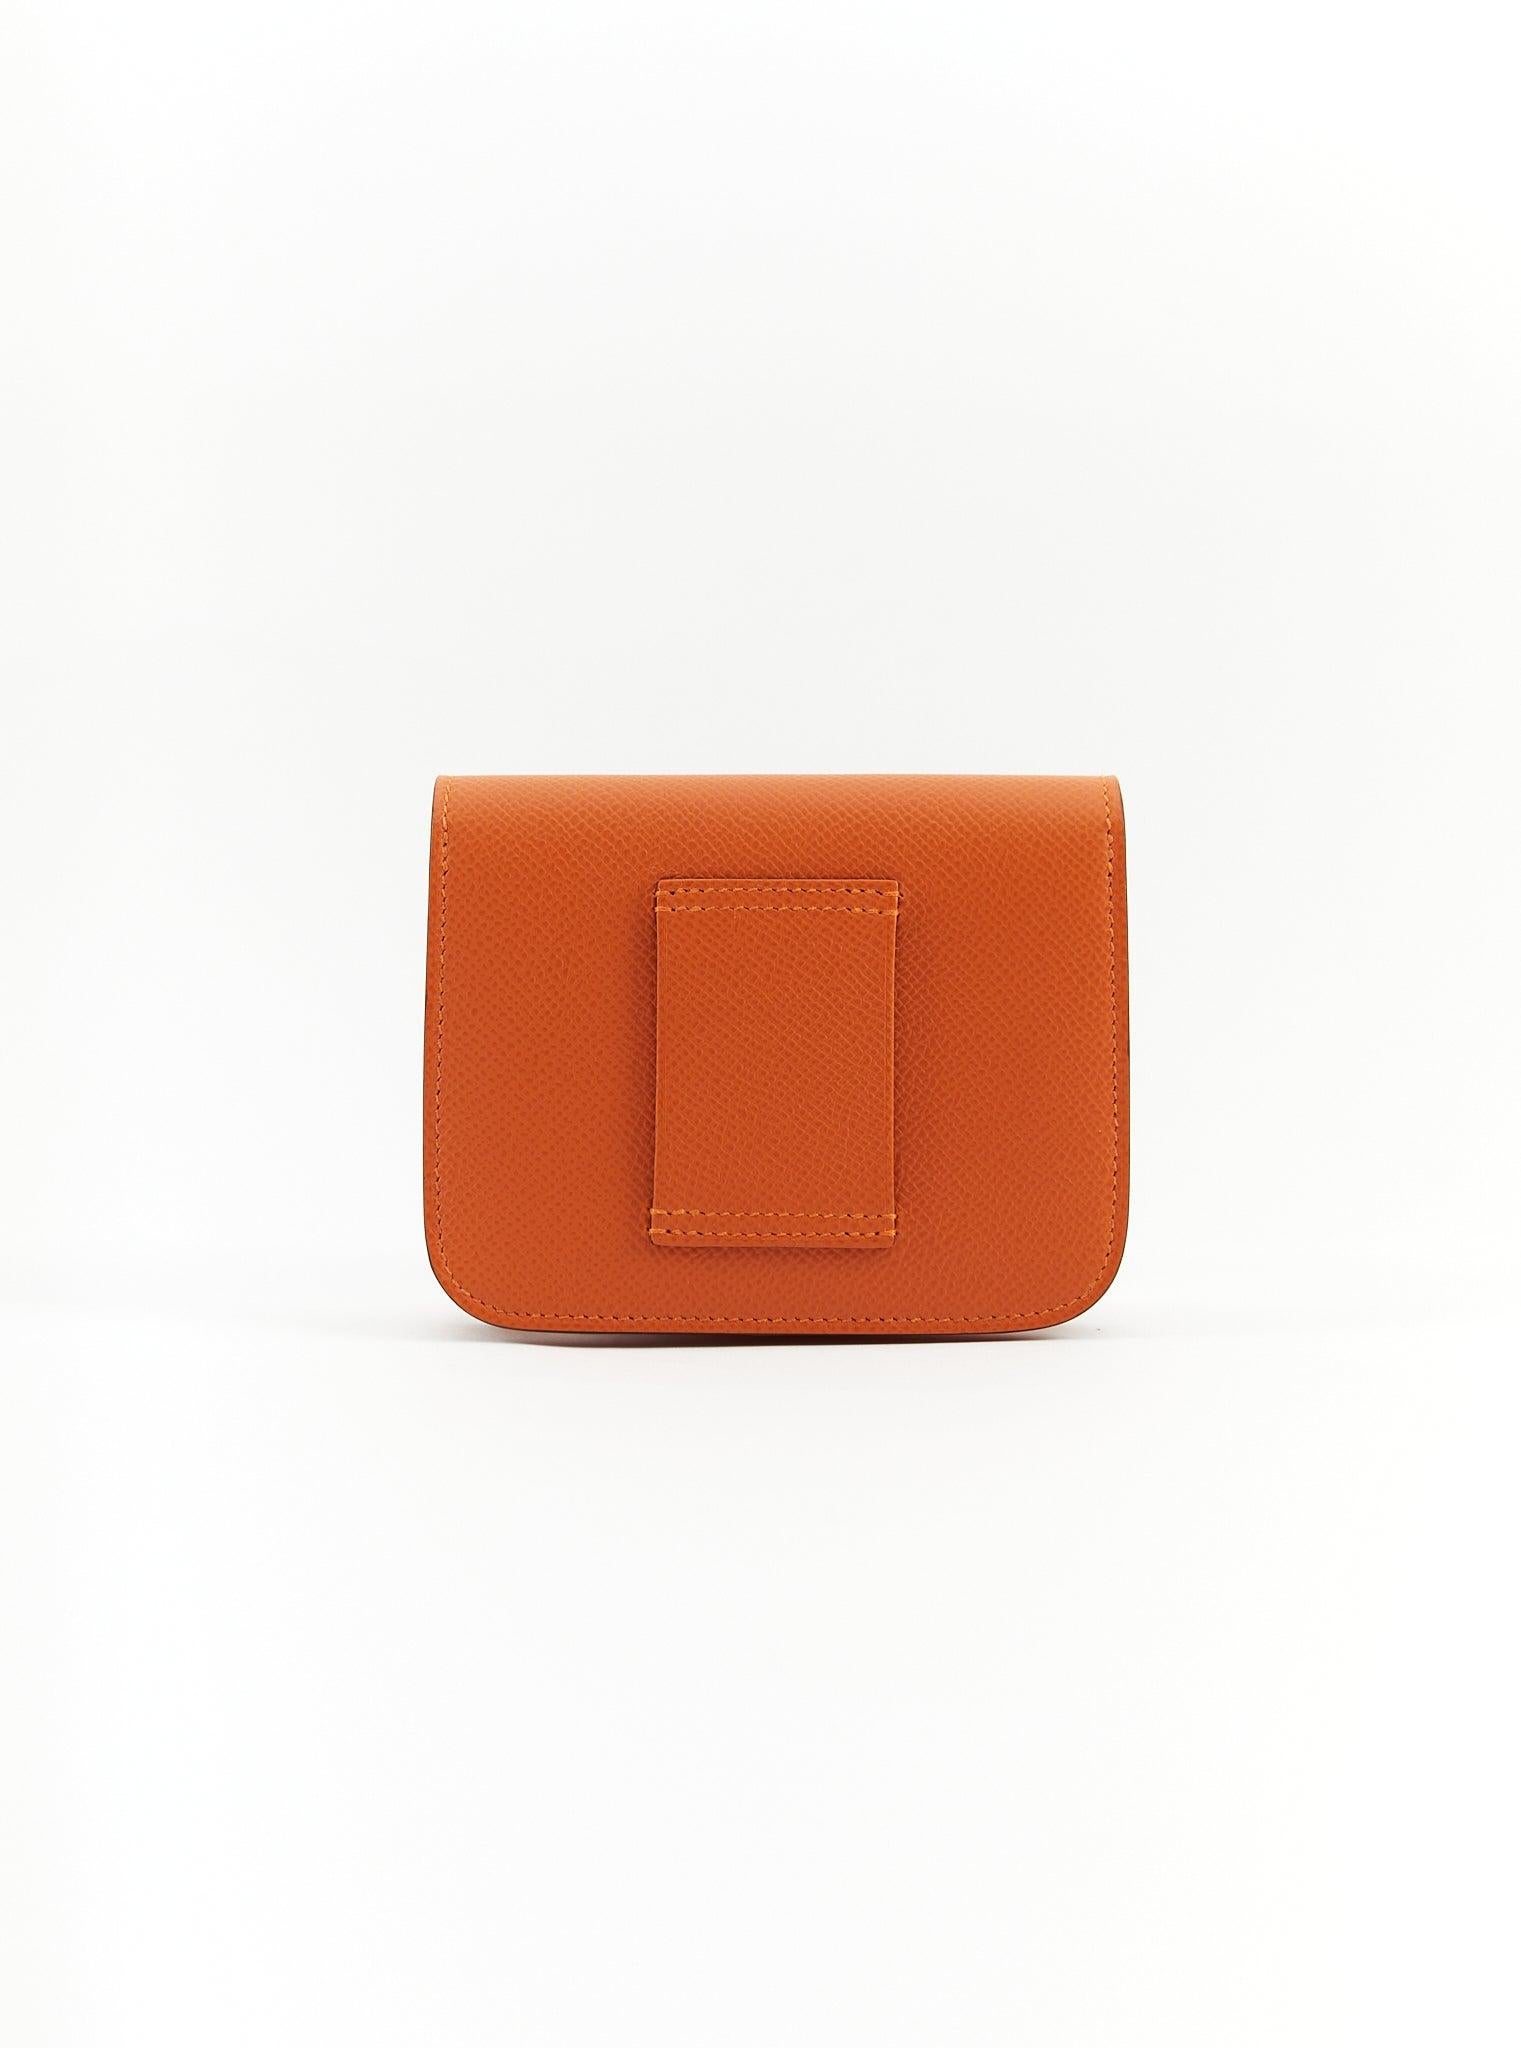 HERMÈS CONSTANCE SLIM WALLET ORANGE Epsom Leather with Palladium Hardware For Sale 1